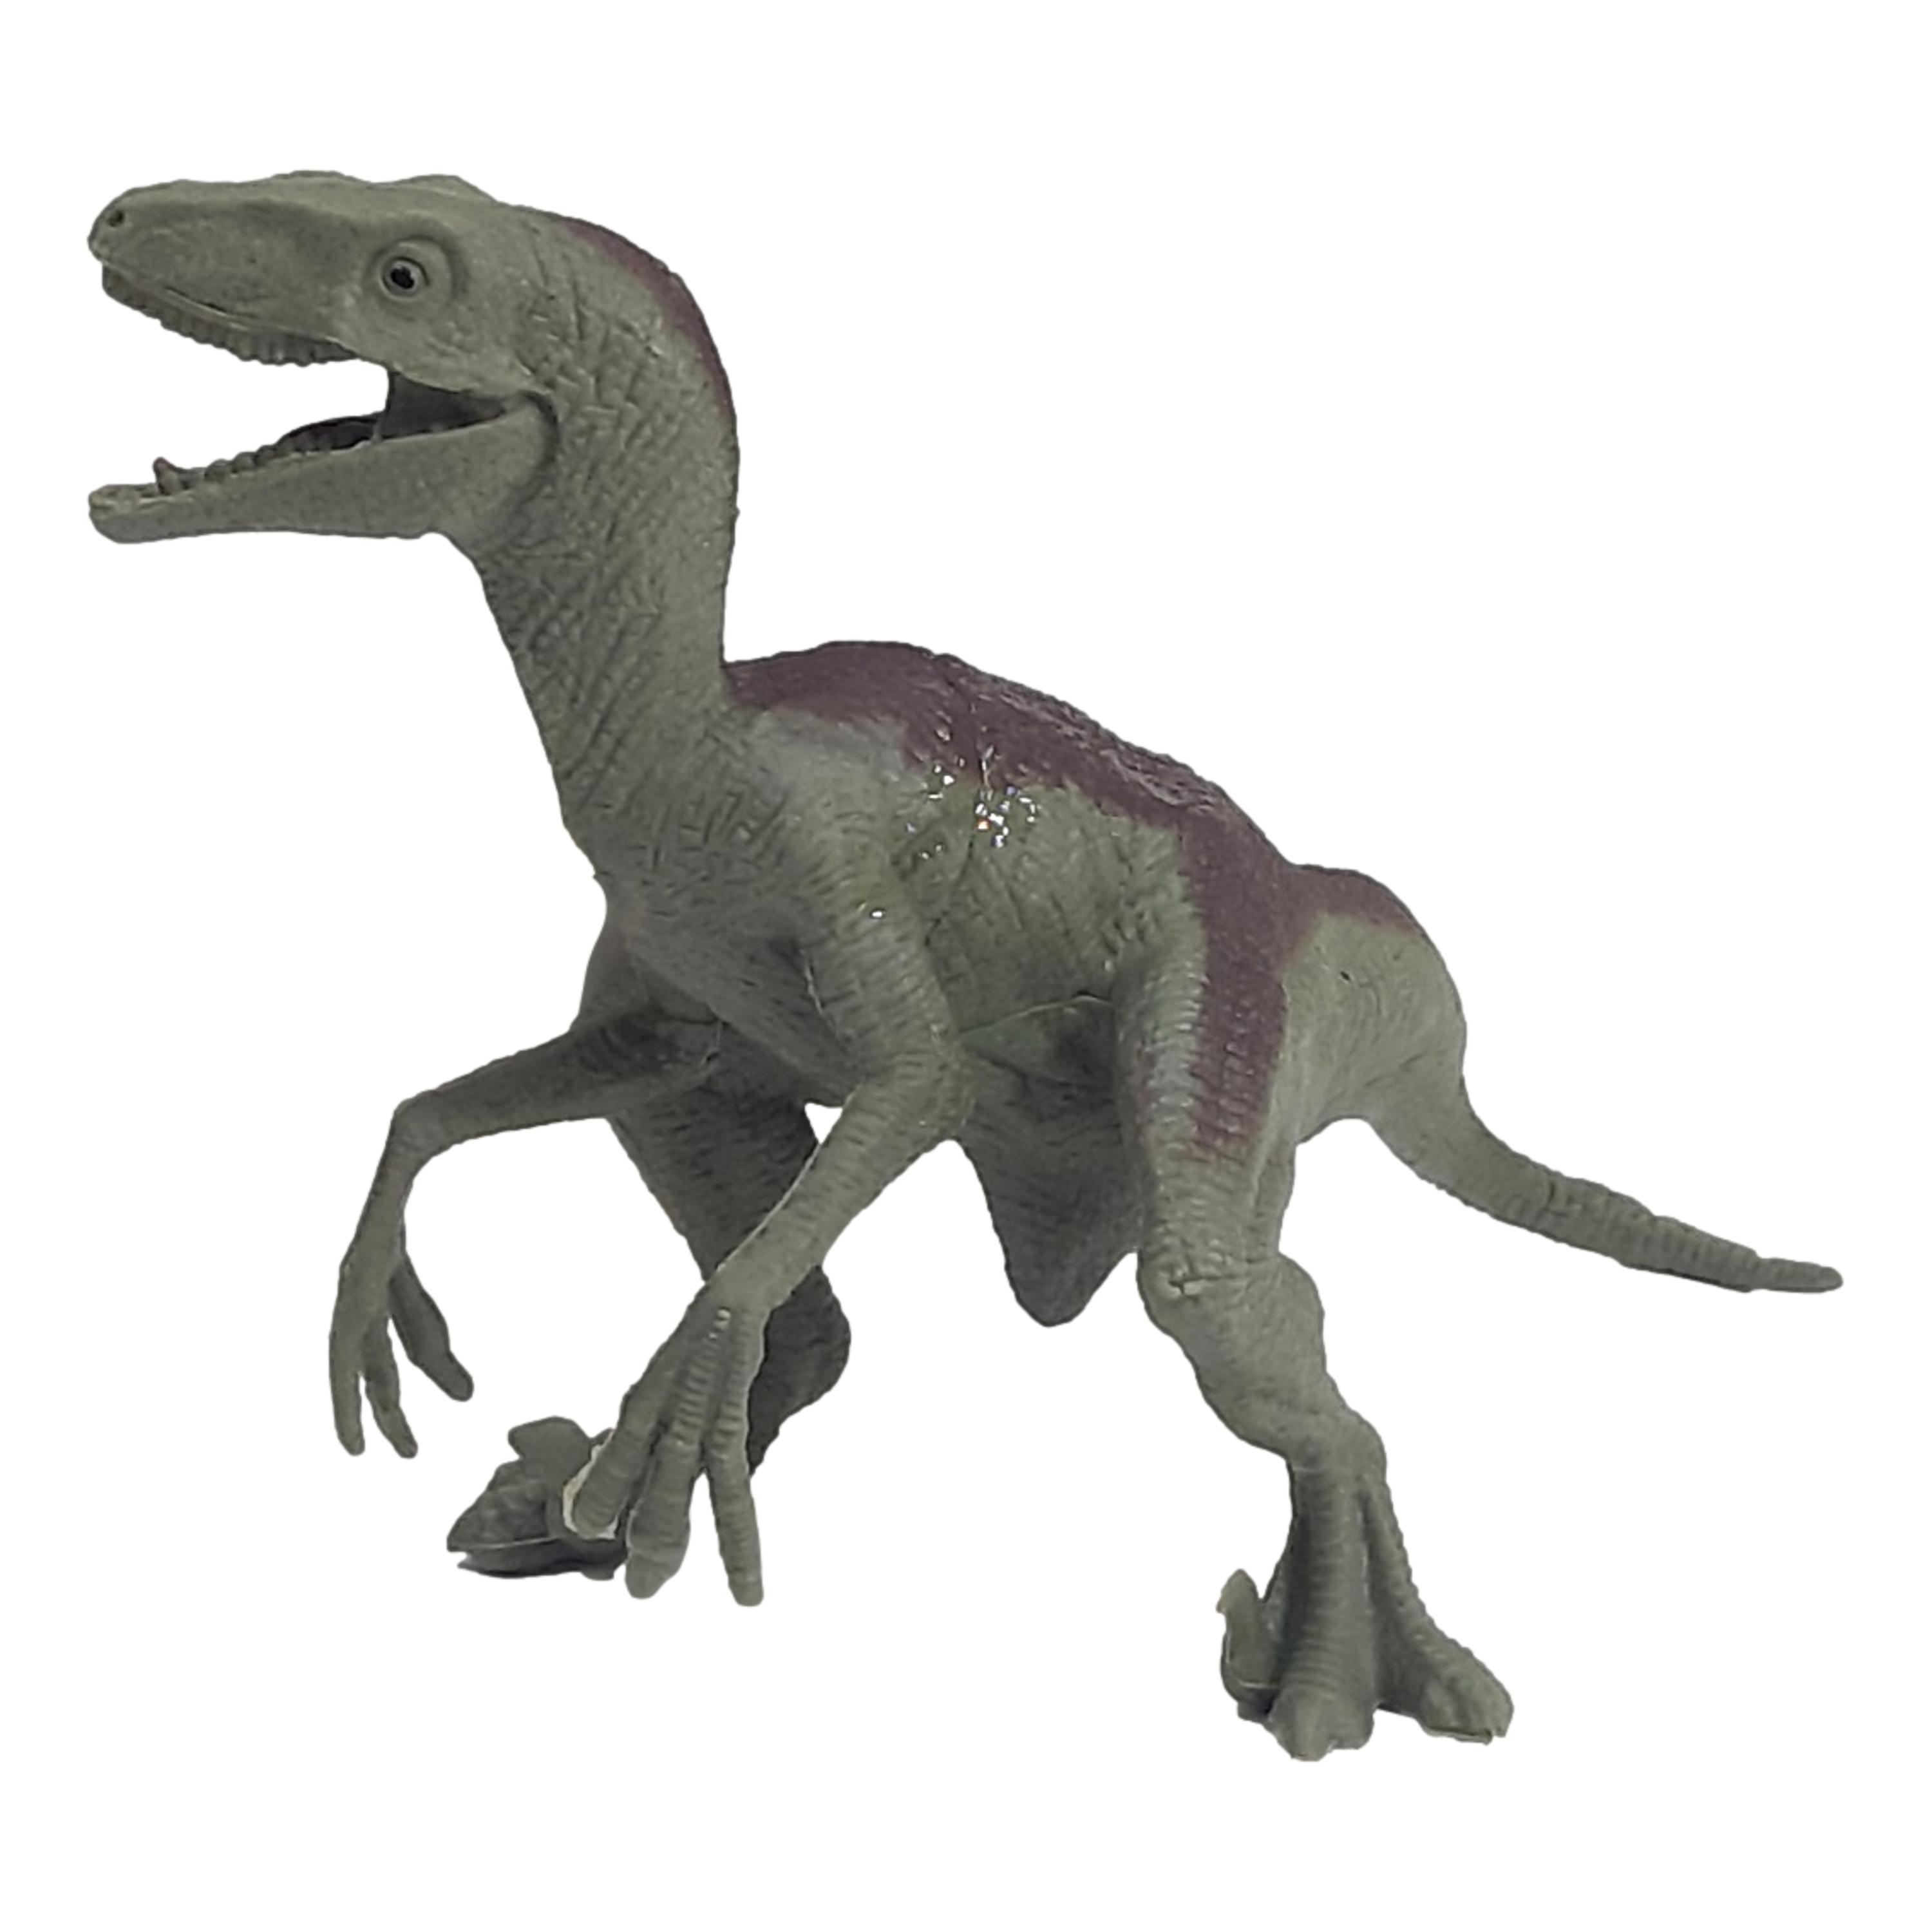 Figurina Dinozaur de Colectie, Dimensiune 10 cm, Model Realist, Gri / Maro